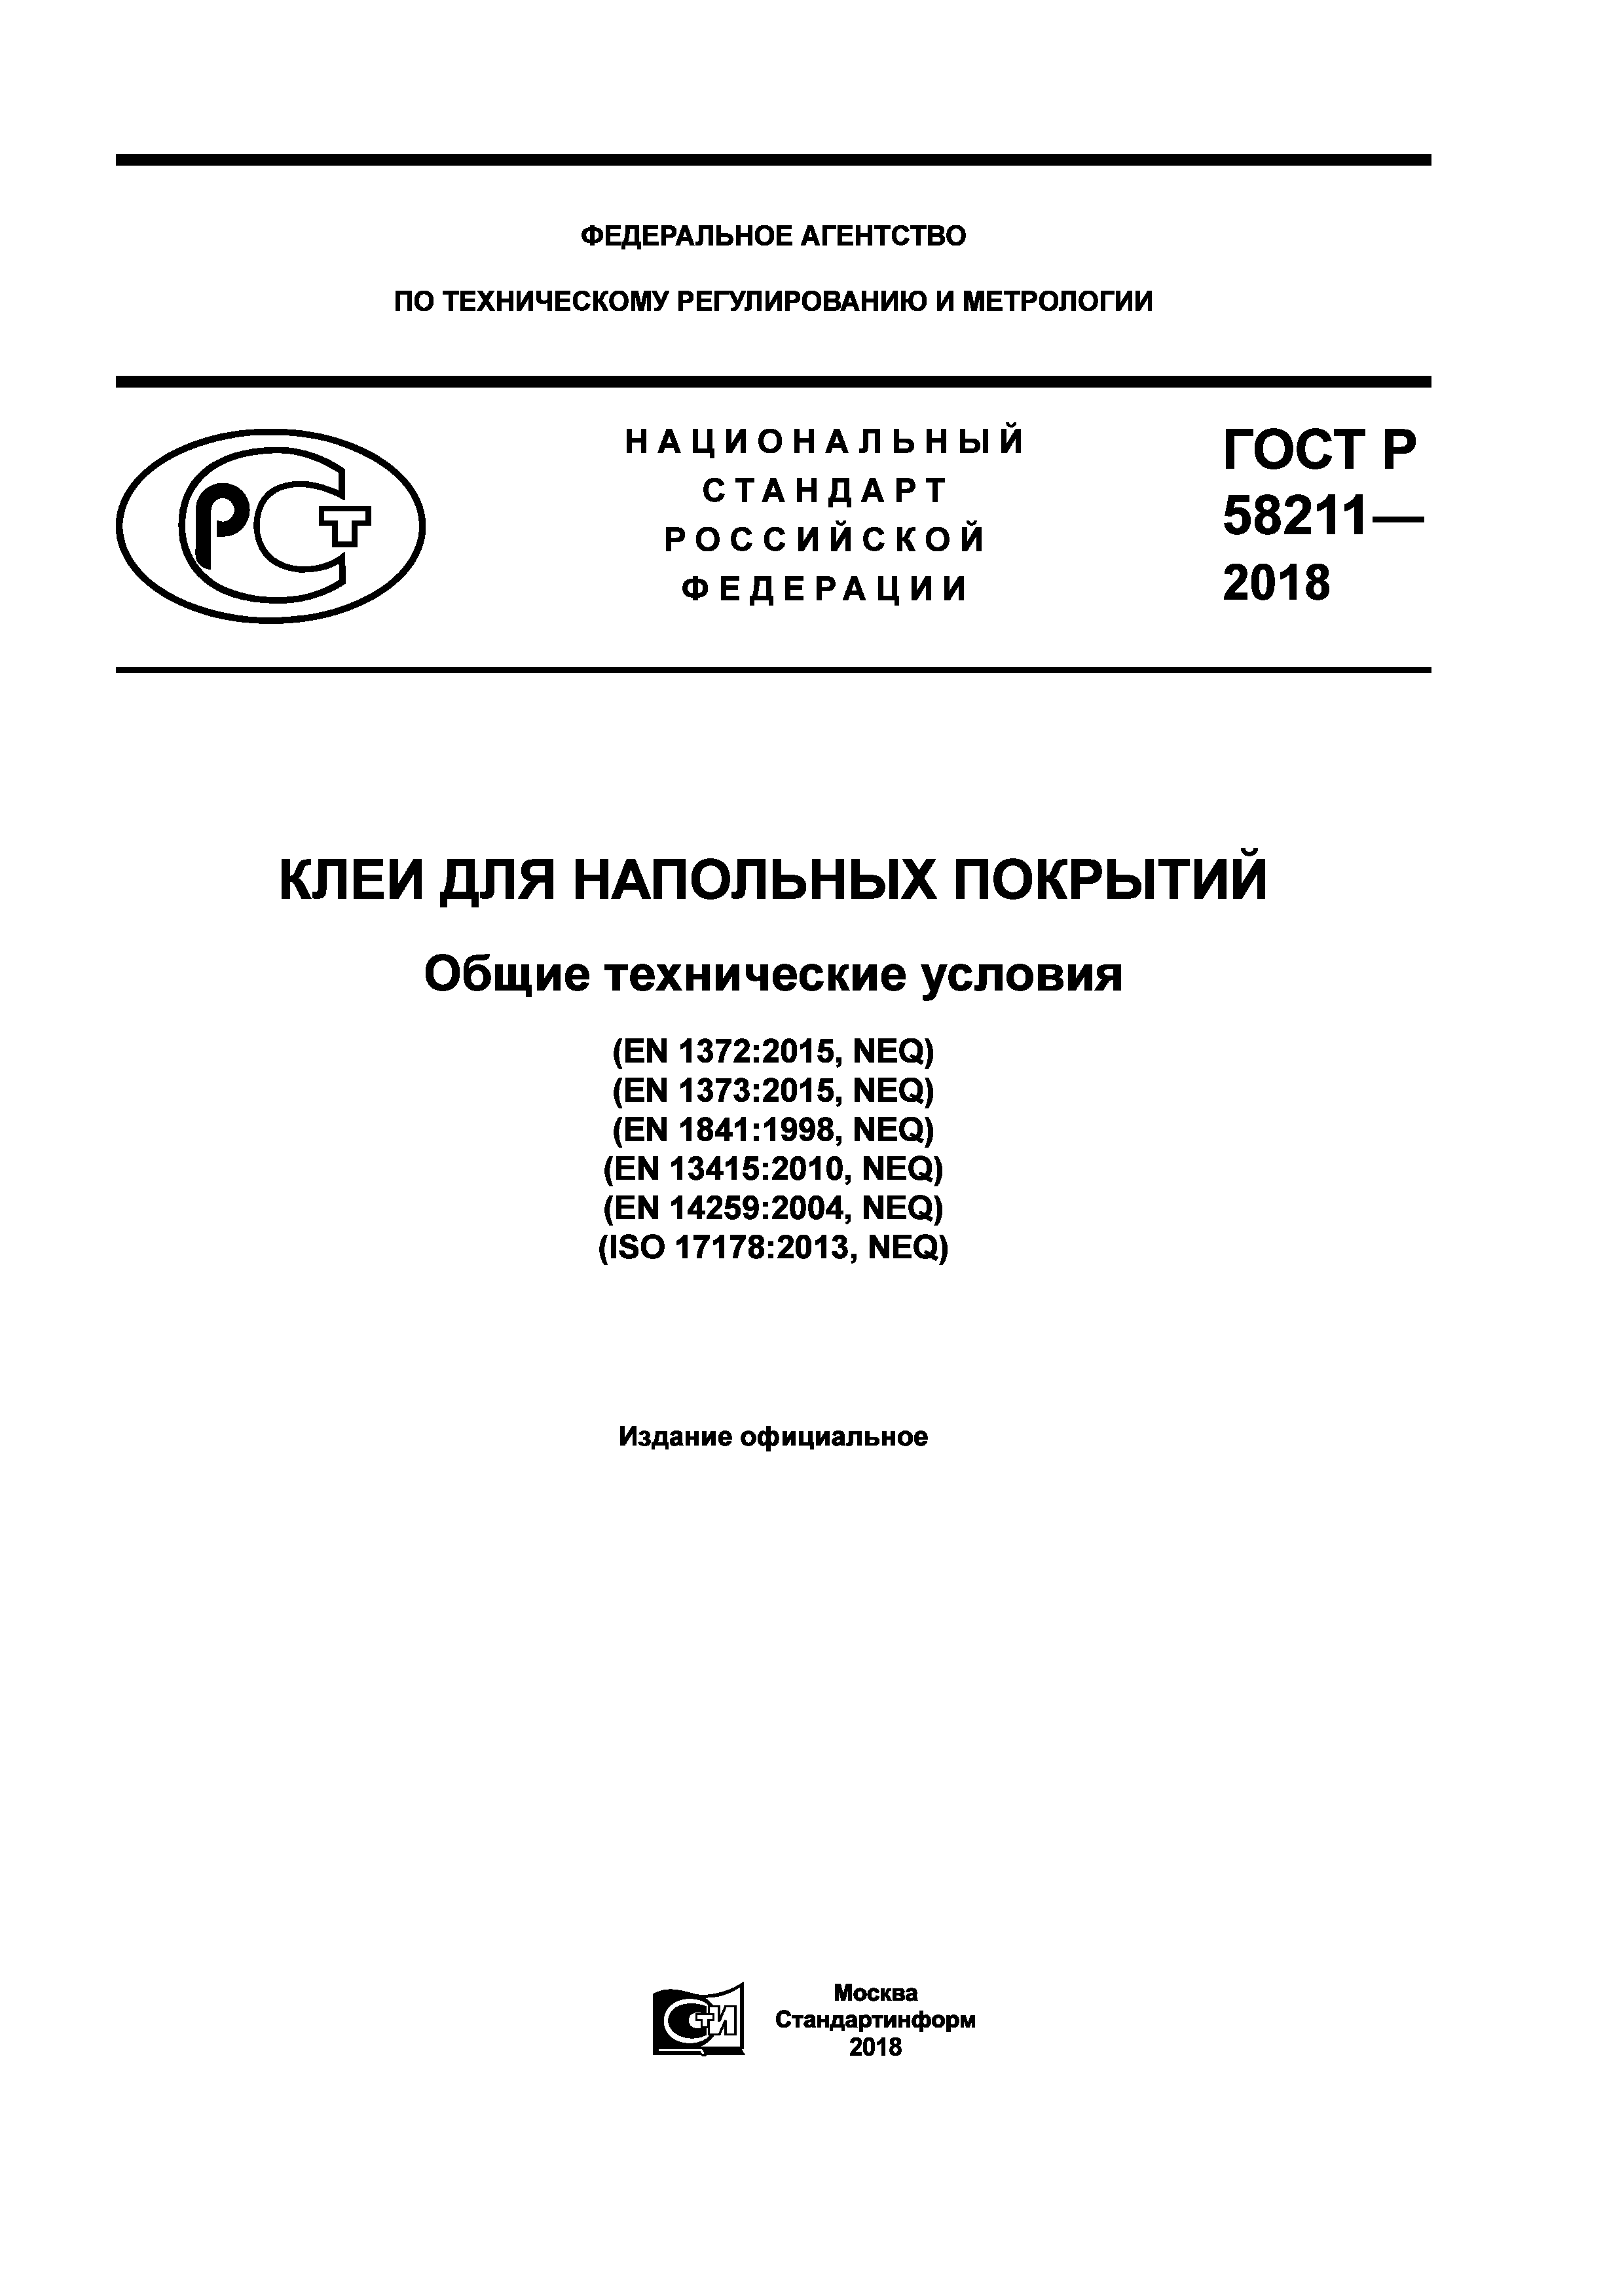 ГОСТ Р 58211-2018